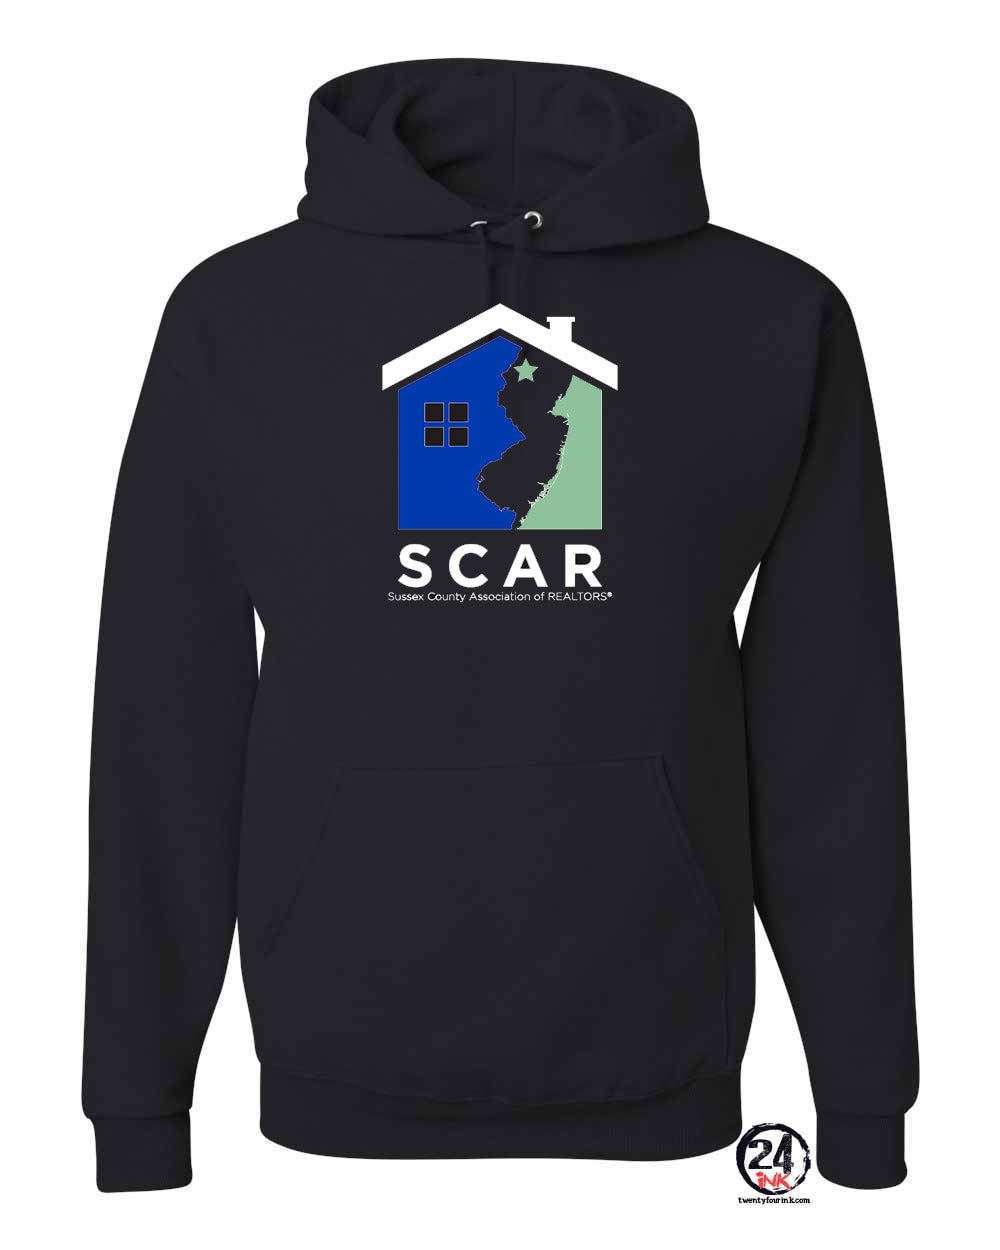 SCAR Hooded Sweatshirt Design 5